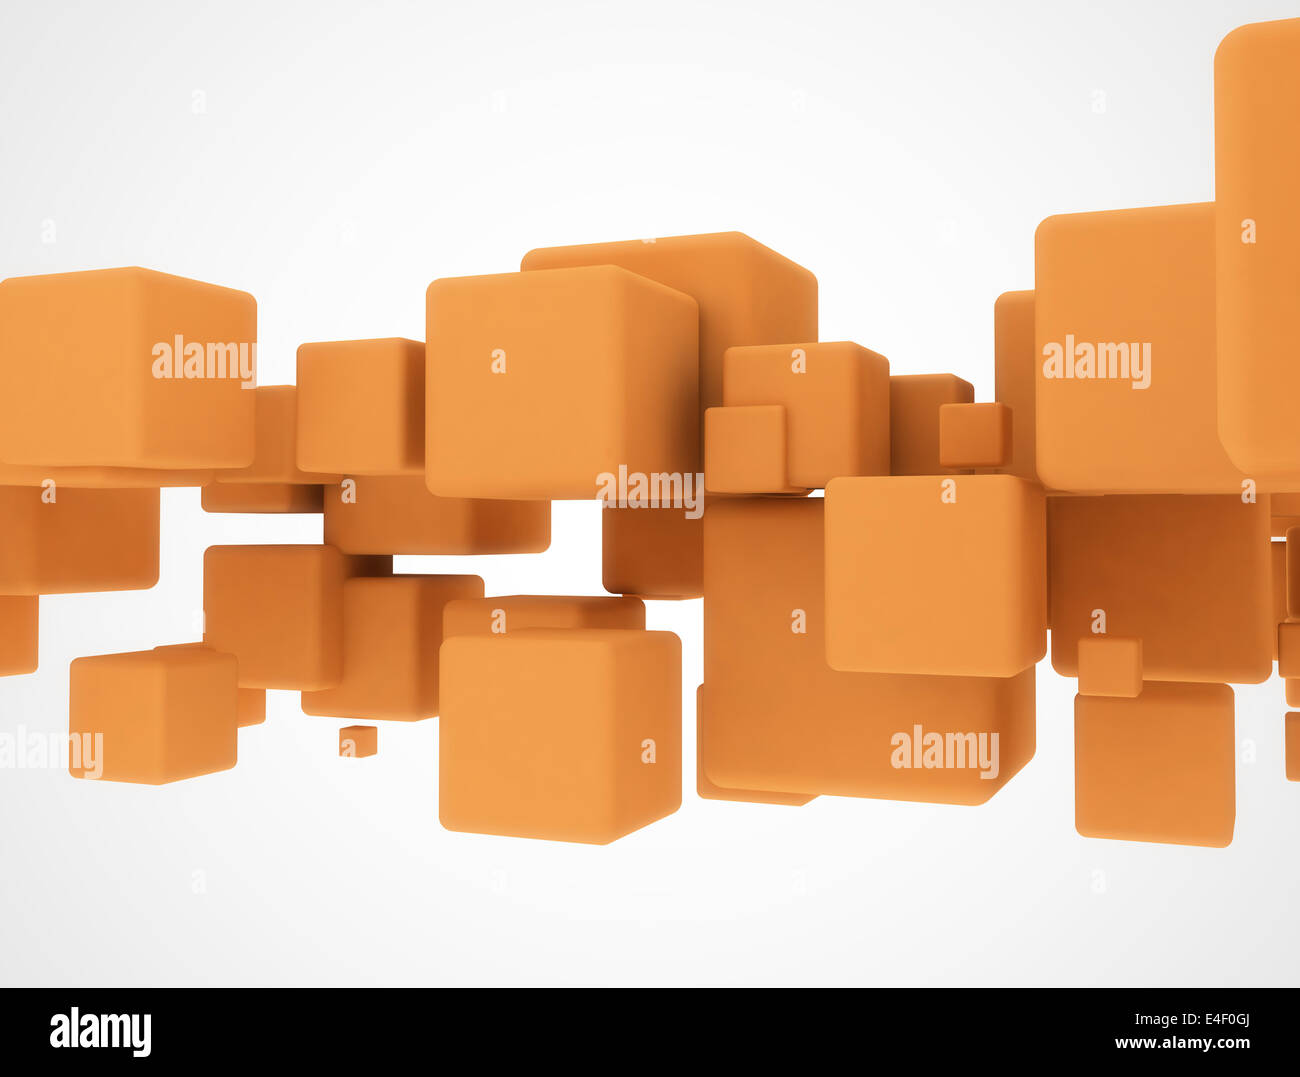 Cubes 3d Orange abstract illustration Banque D'Images